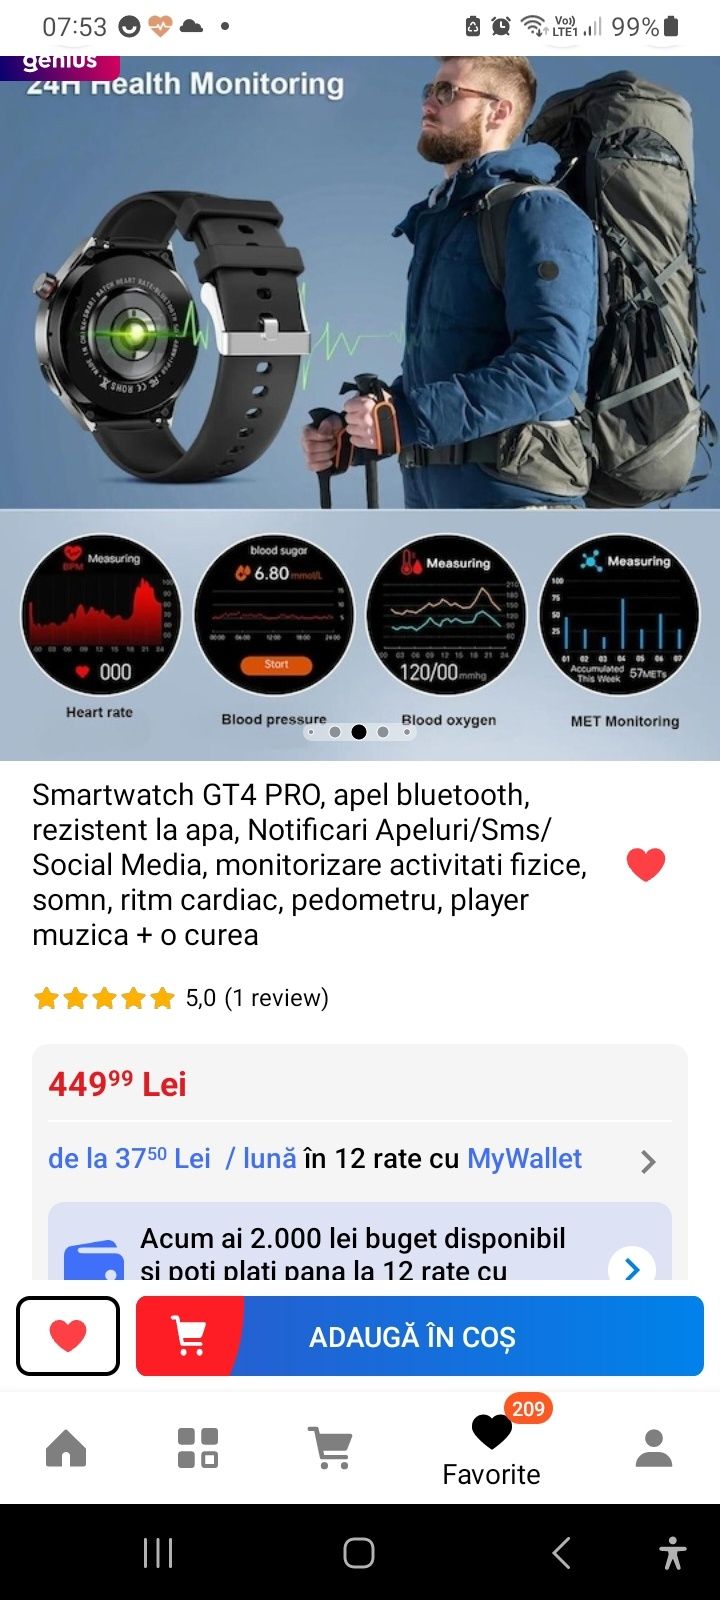 Smartwatch g4 pro